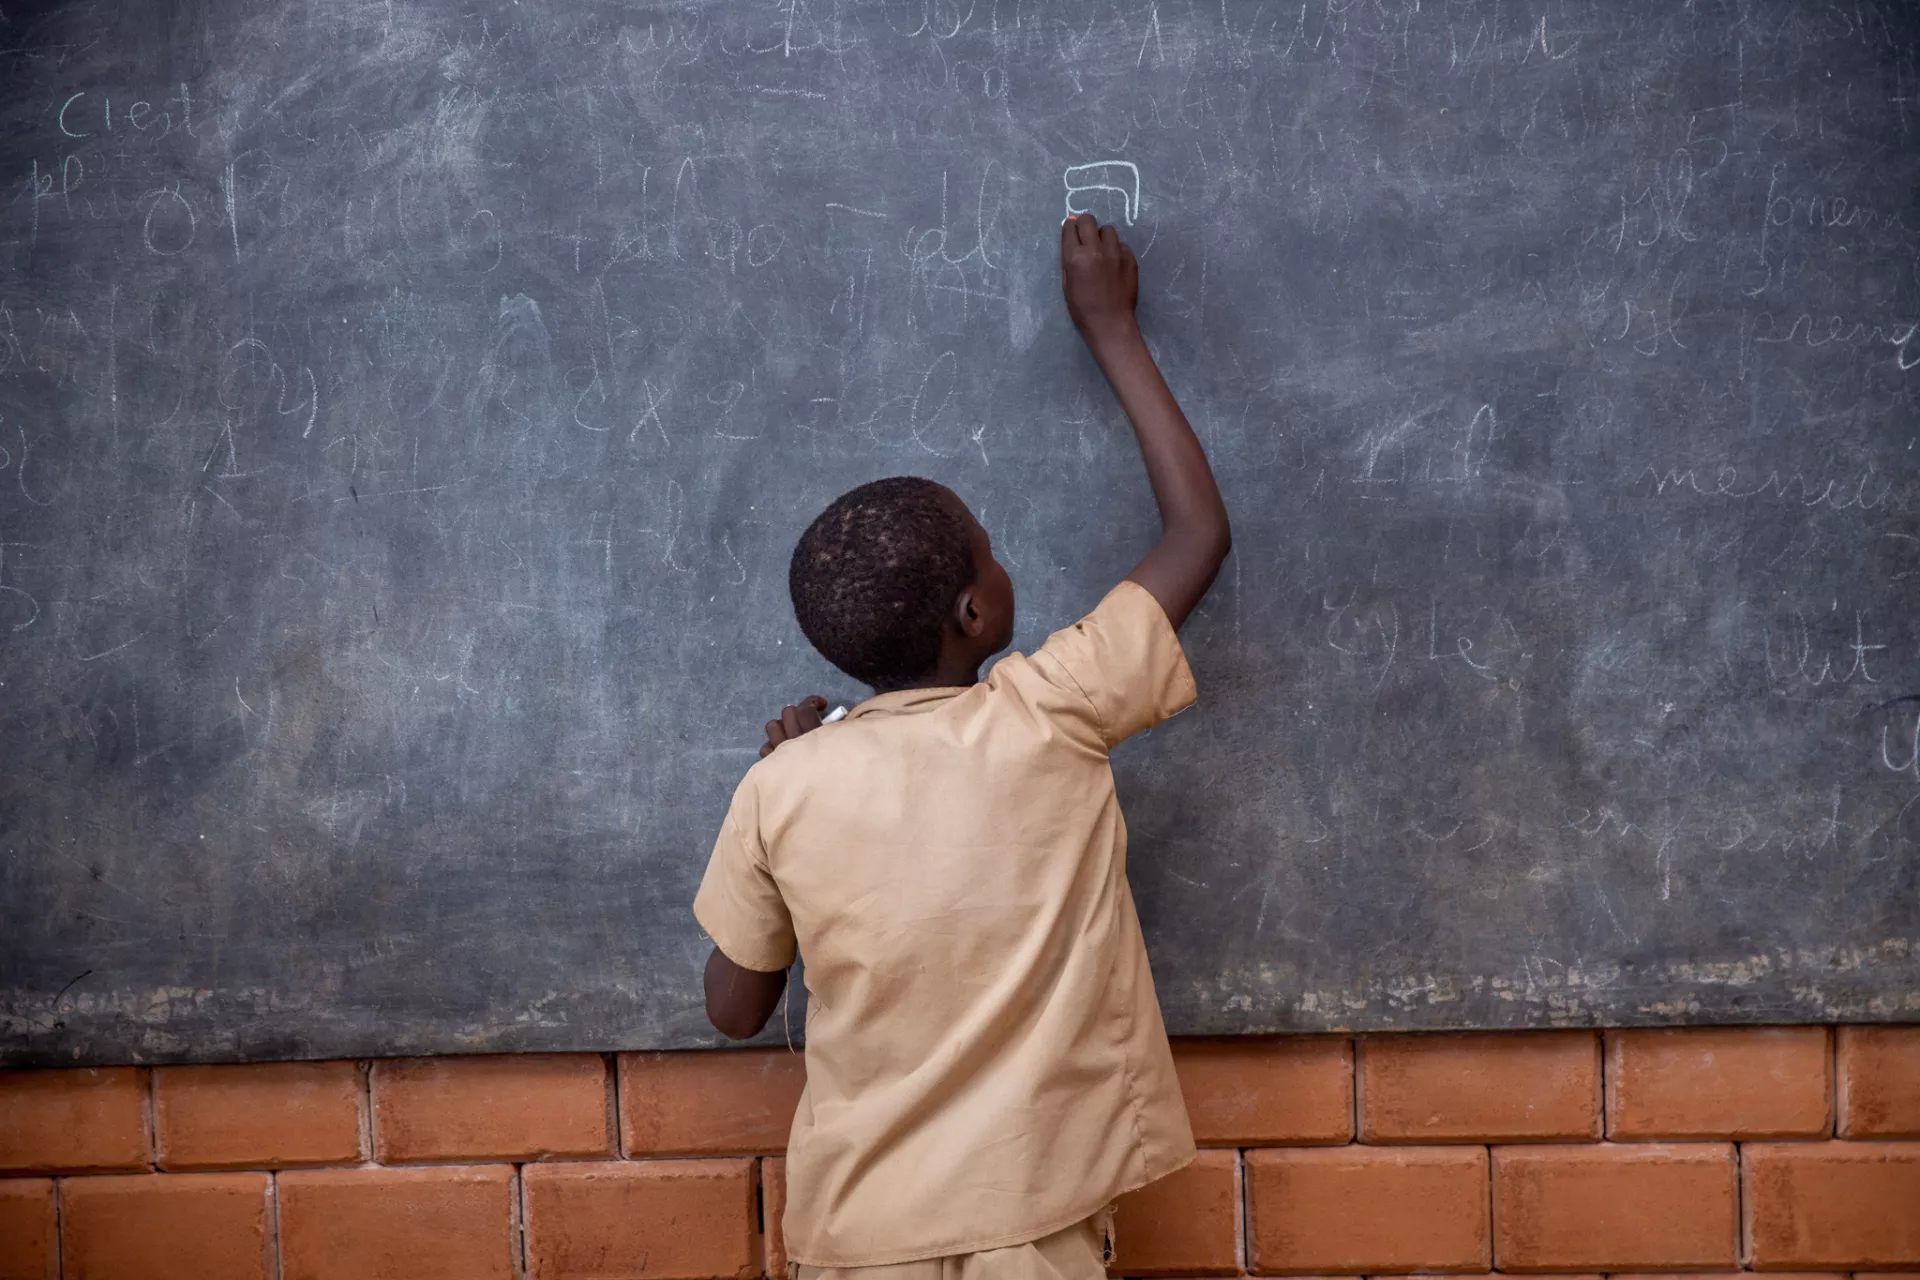 Child writing on blackboard